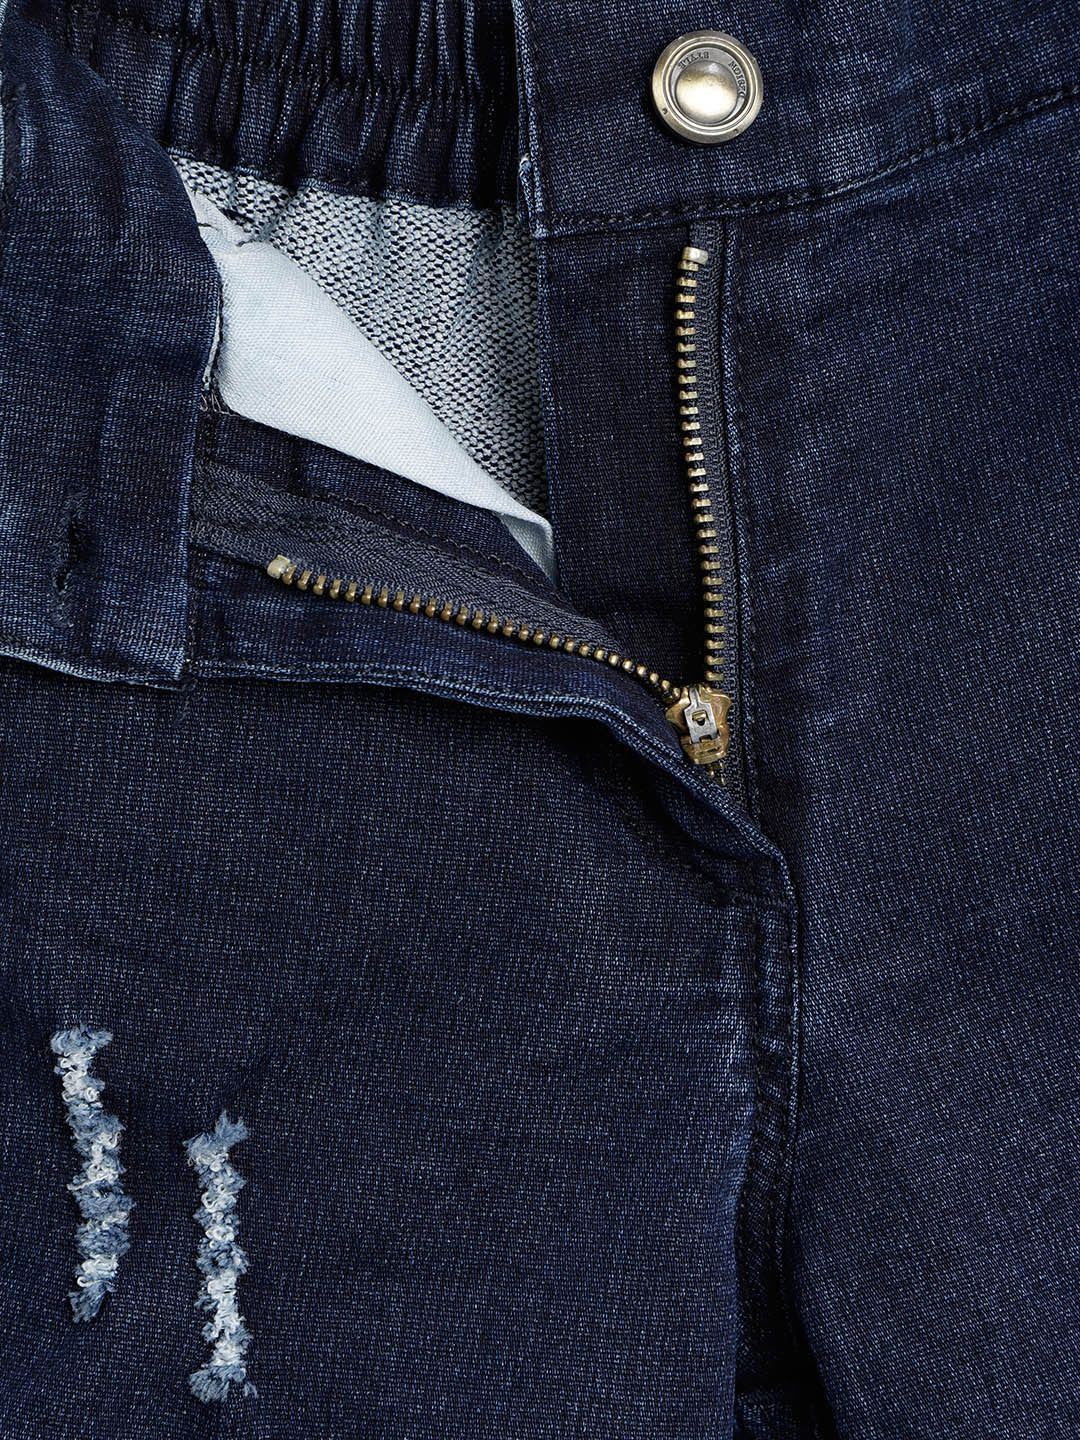 Amazon.co.jp: Men's Trendy Jeans Men's Ripped Jeans Badge Decoration Patch  Scratch Youth Slim Pants Denim Blue 33 : Clothing, Shoes & Jewelry